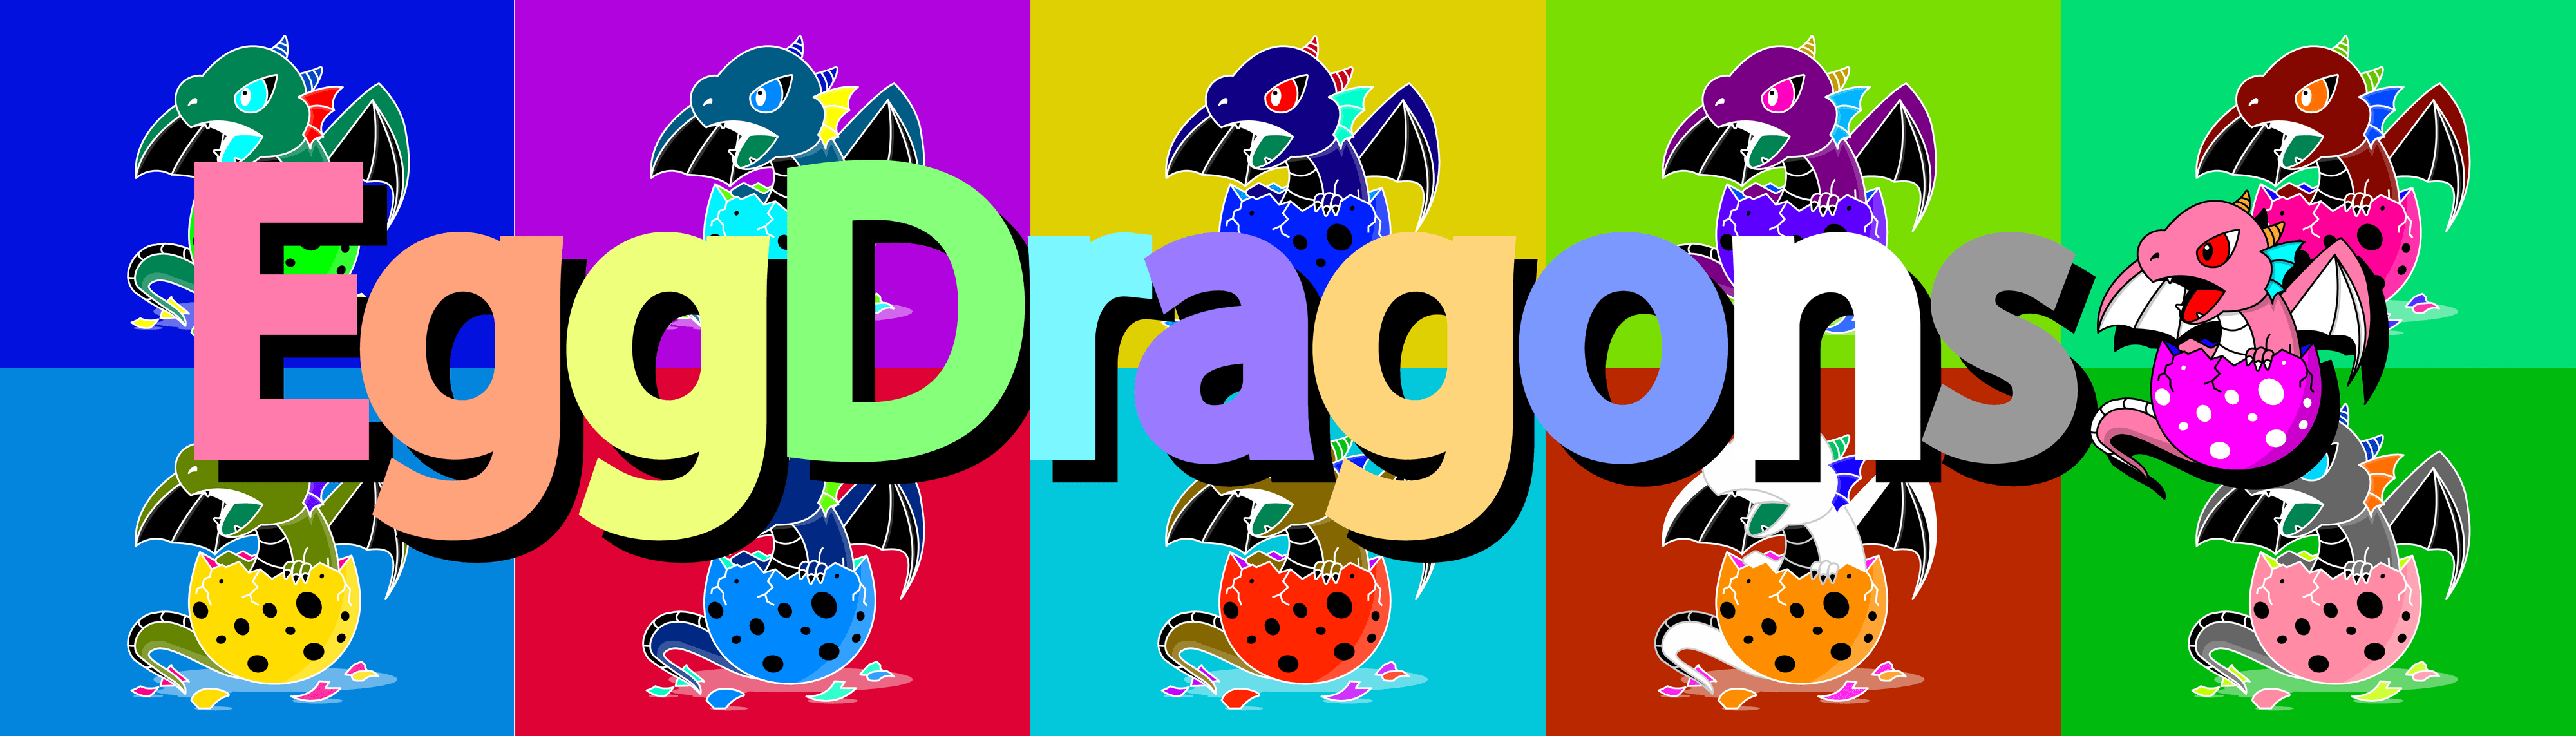 EggDragon banner